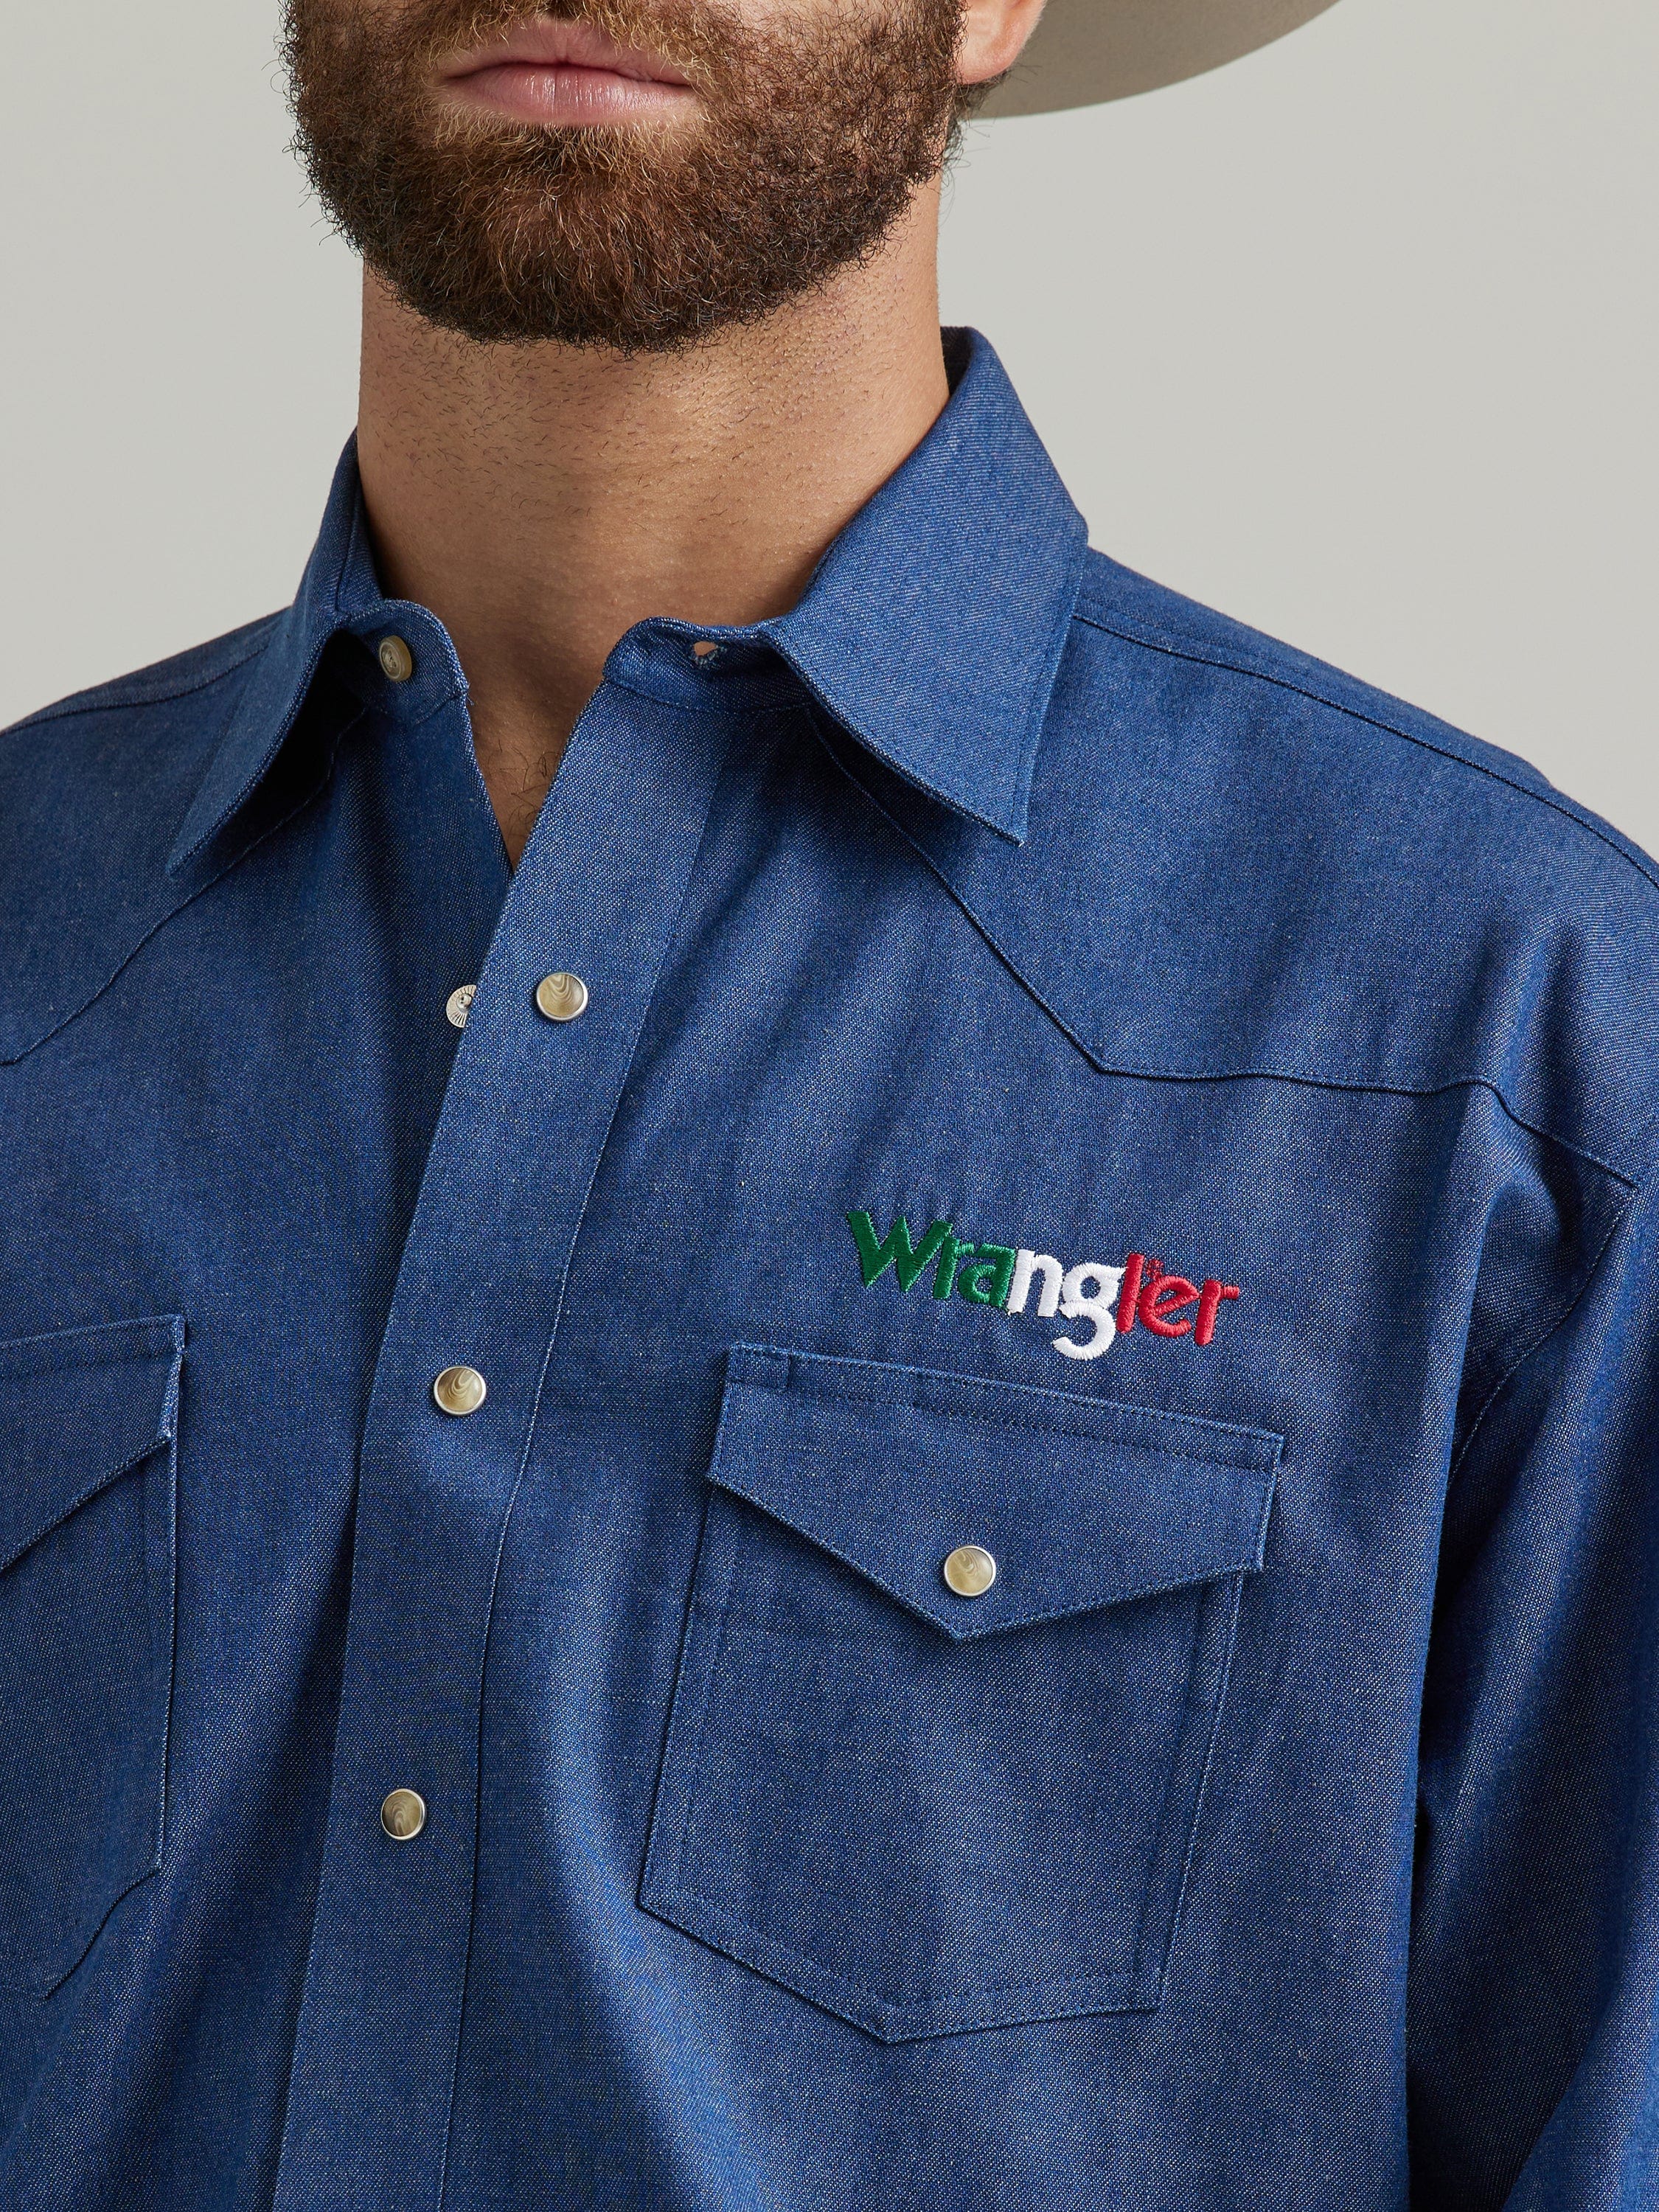 Wrangler Cowboy Cut Denim Shirt Rigid Indigo - Frontier Western Shop